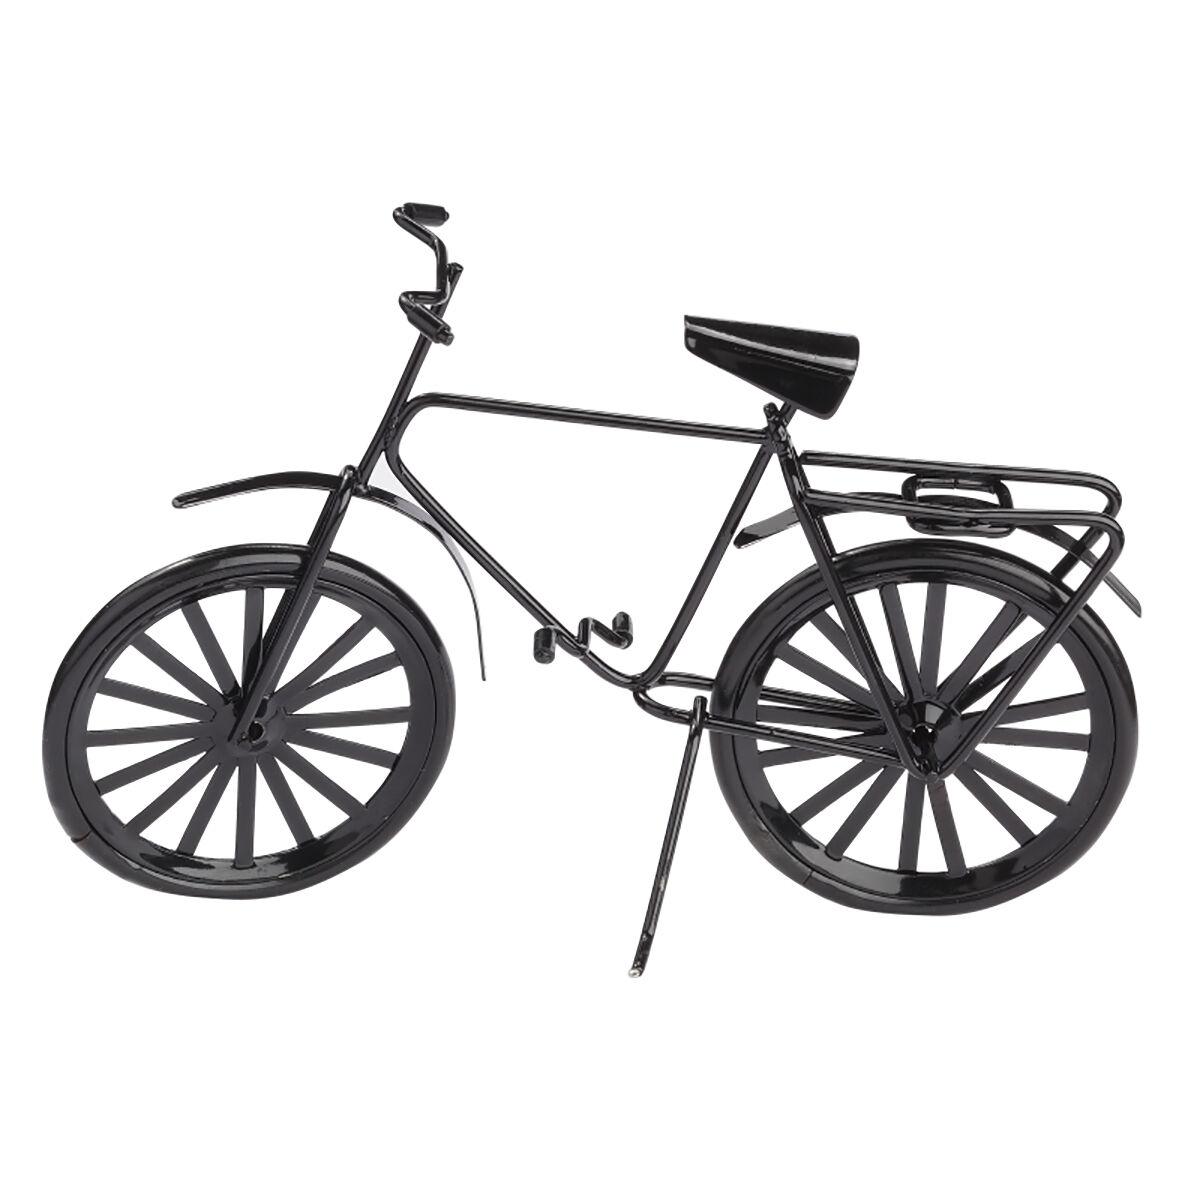 NEU Miniatur-Fahrrad, schwarz, Gre ca. 14 x 10 cm